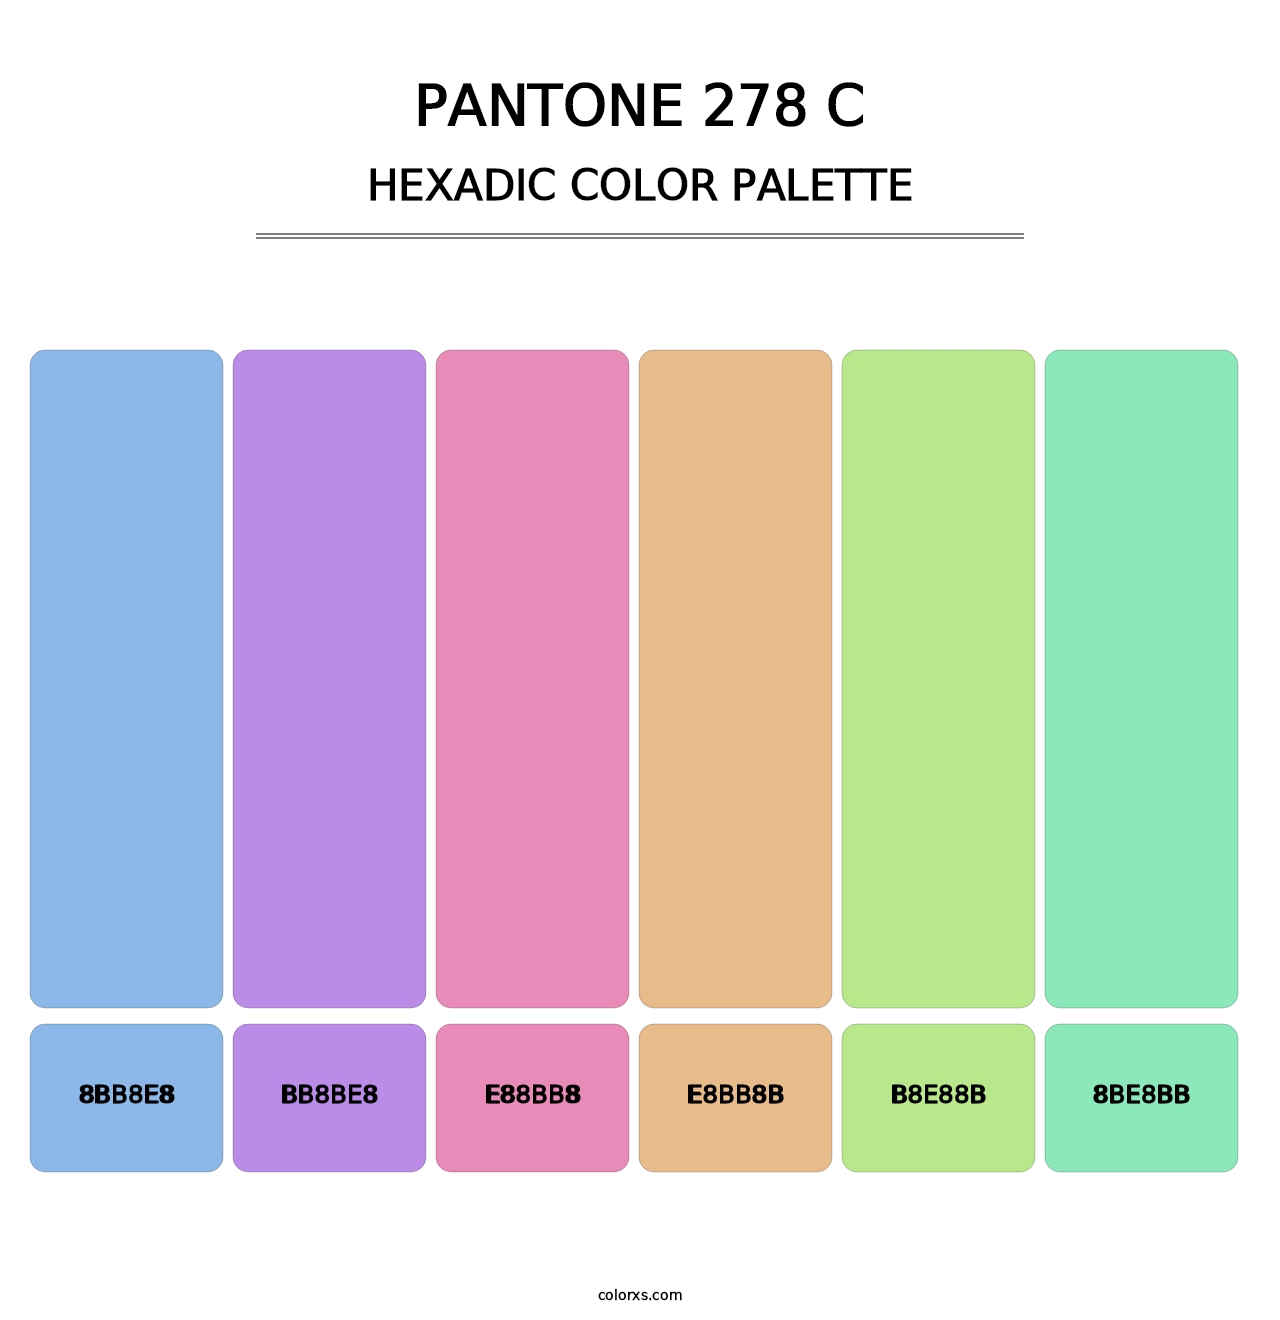 PANTONE 278 C - Hexadic Color Palette